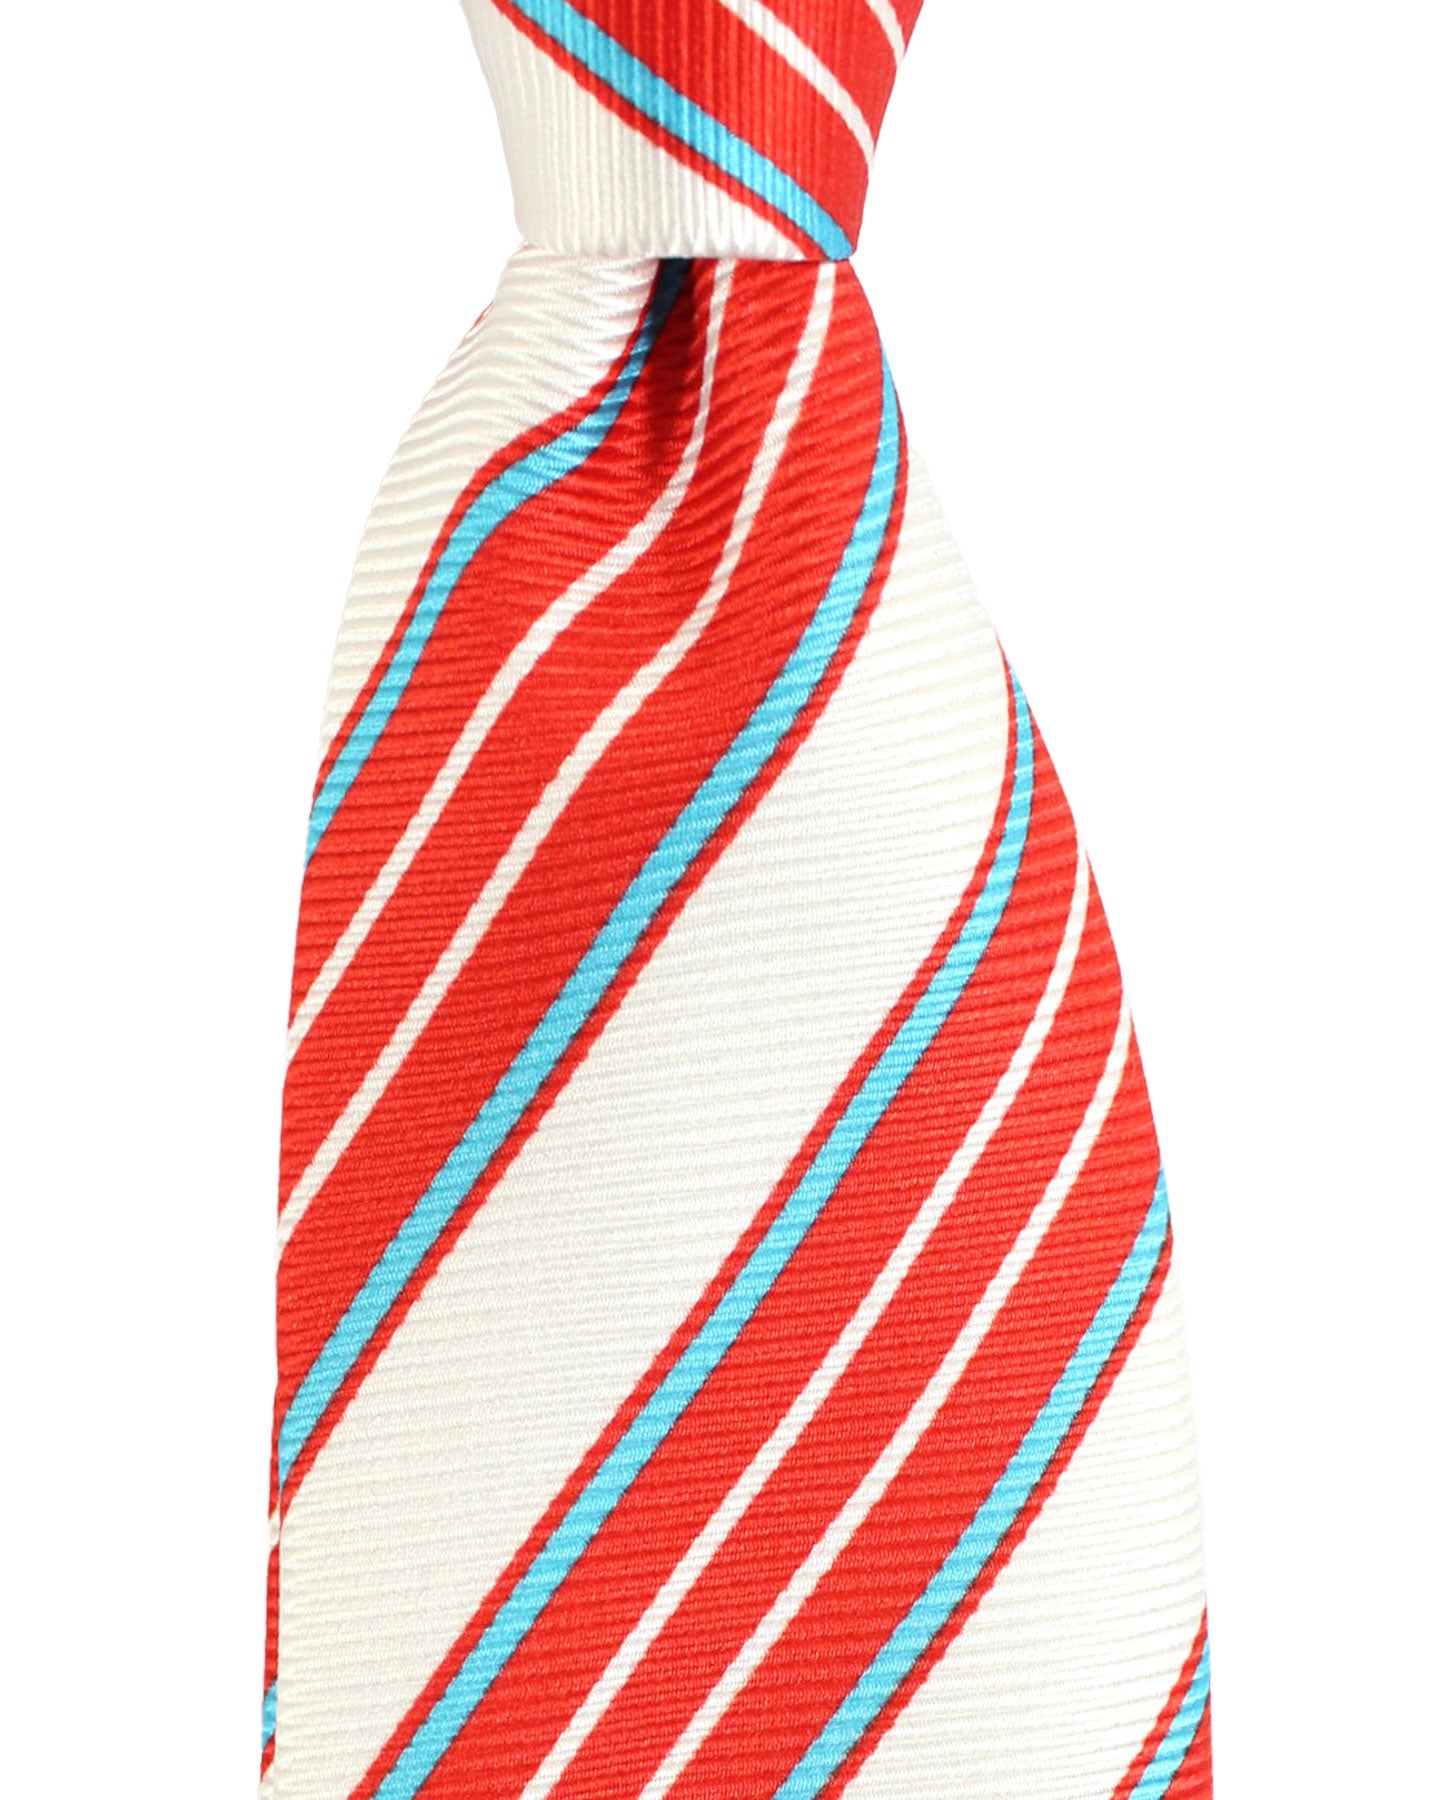 Kiton Tie Red Aqua Silver Stripes Design - Sevenfold Necktie